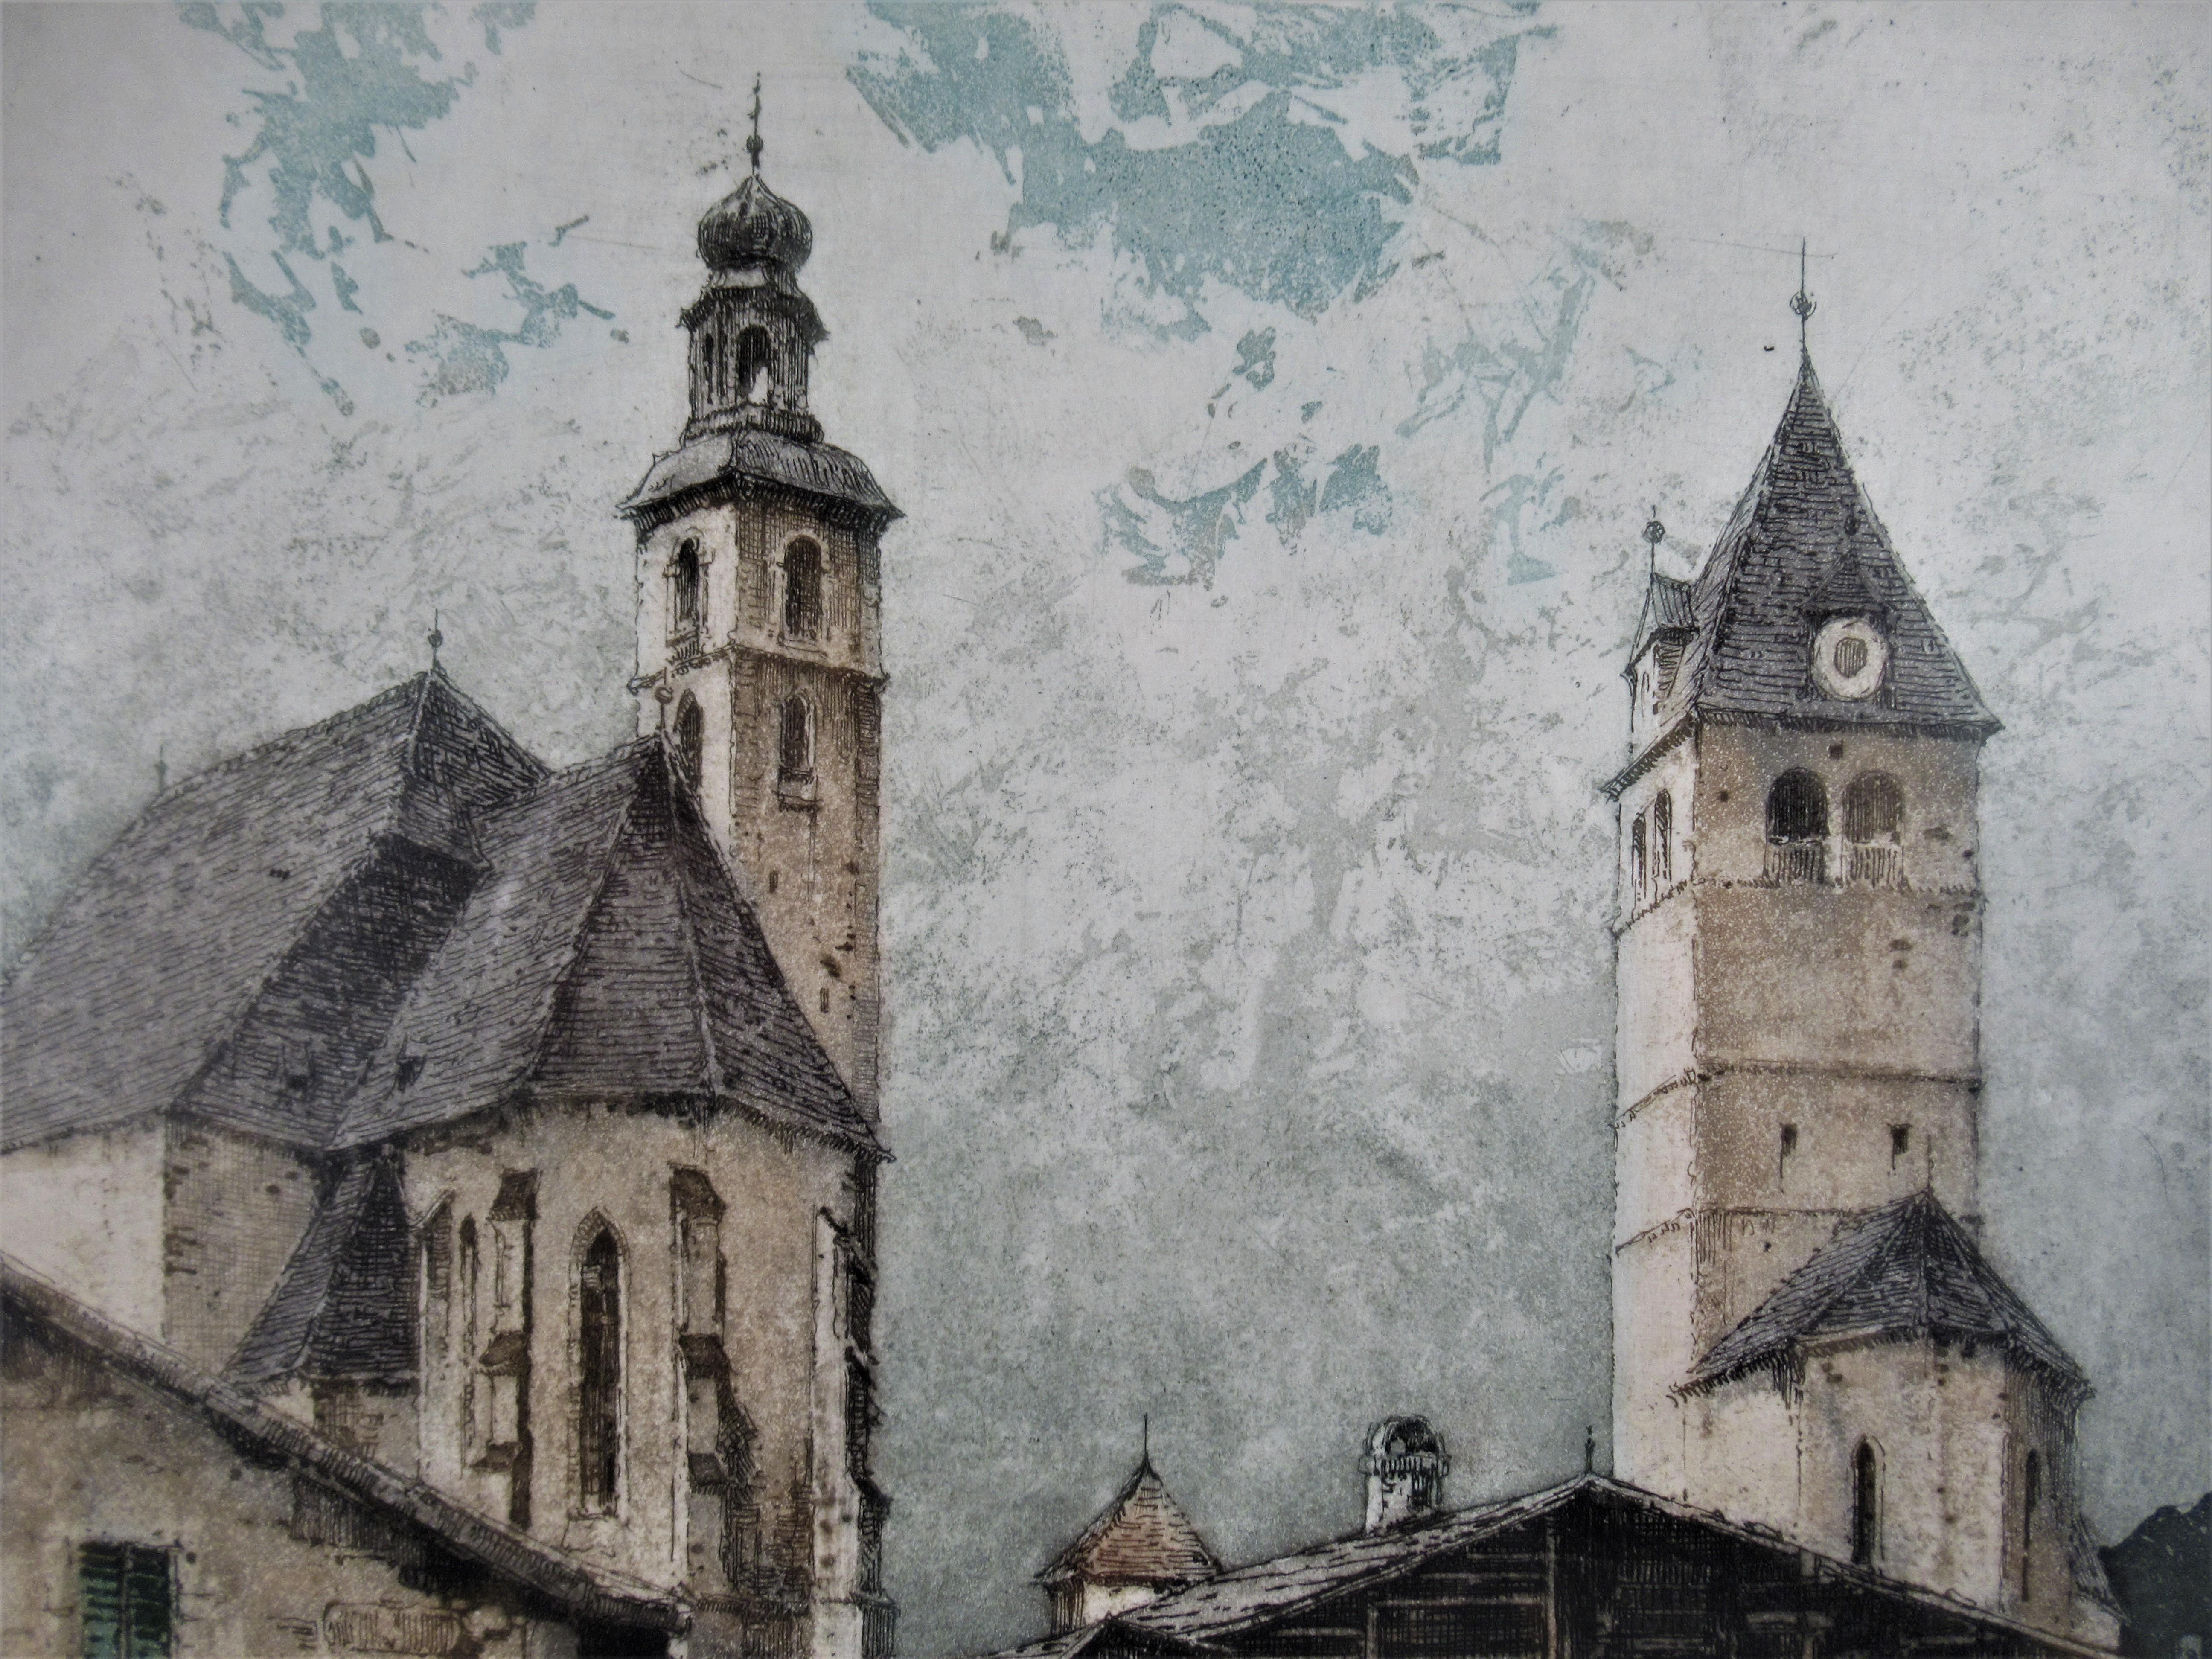 Kitzbuehel, Tyrol - Realist Print by Josef Eidenberger